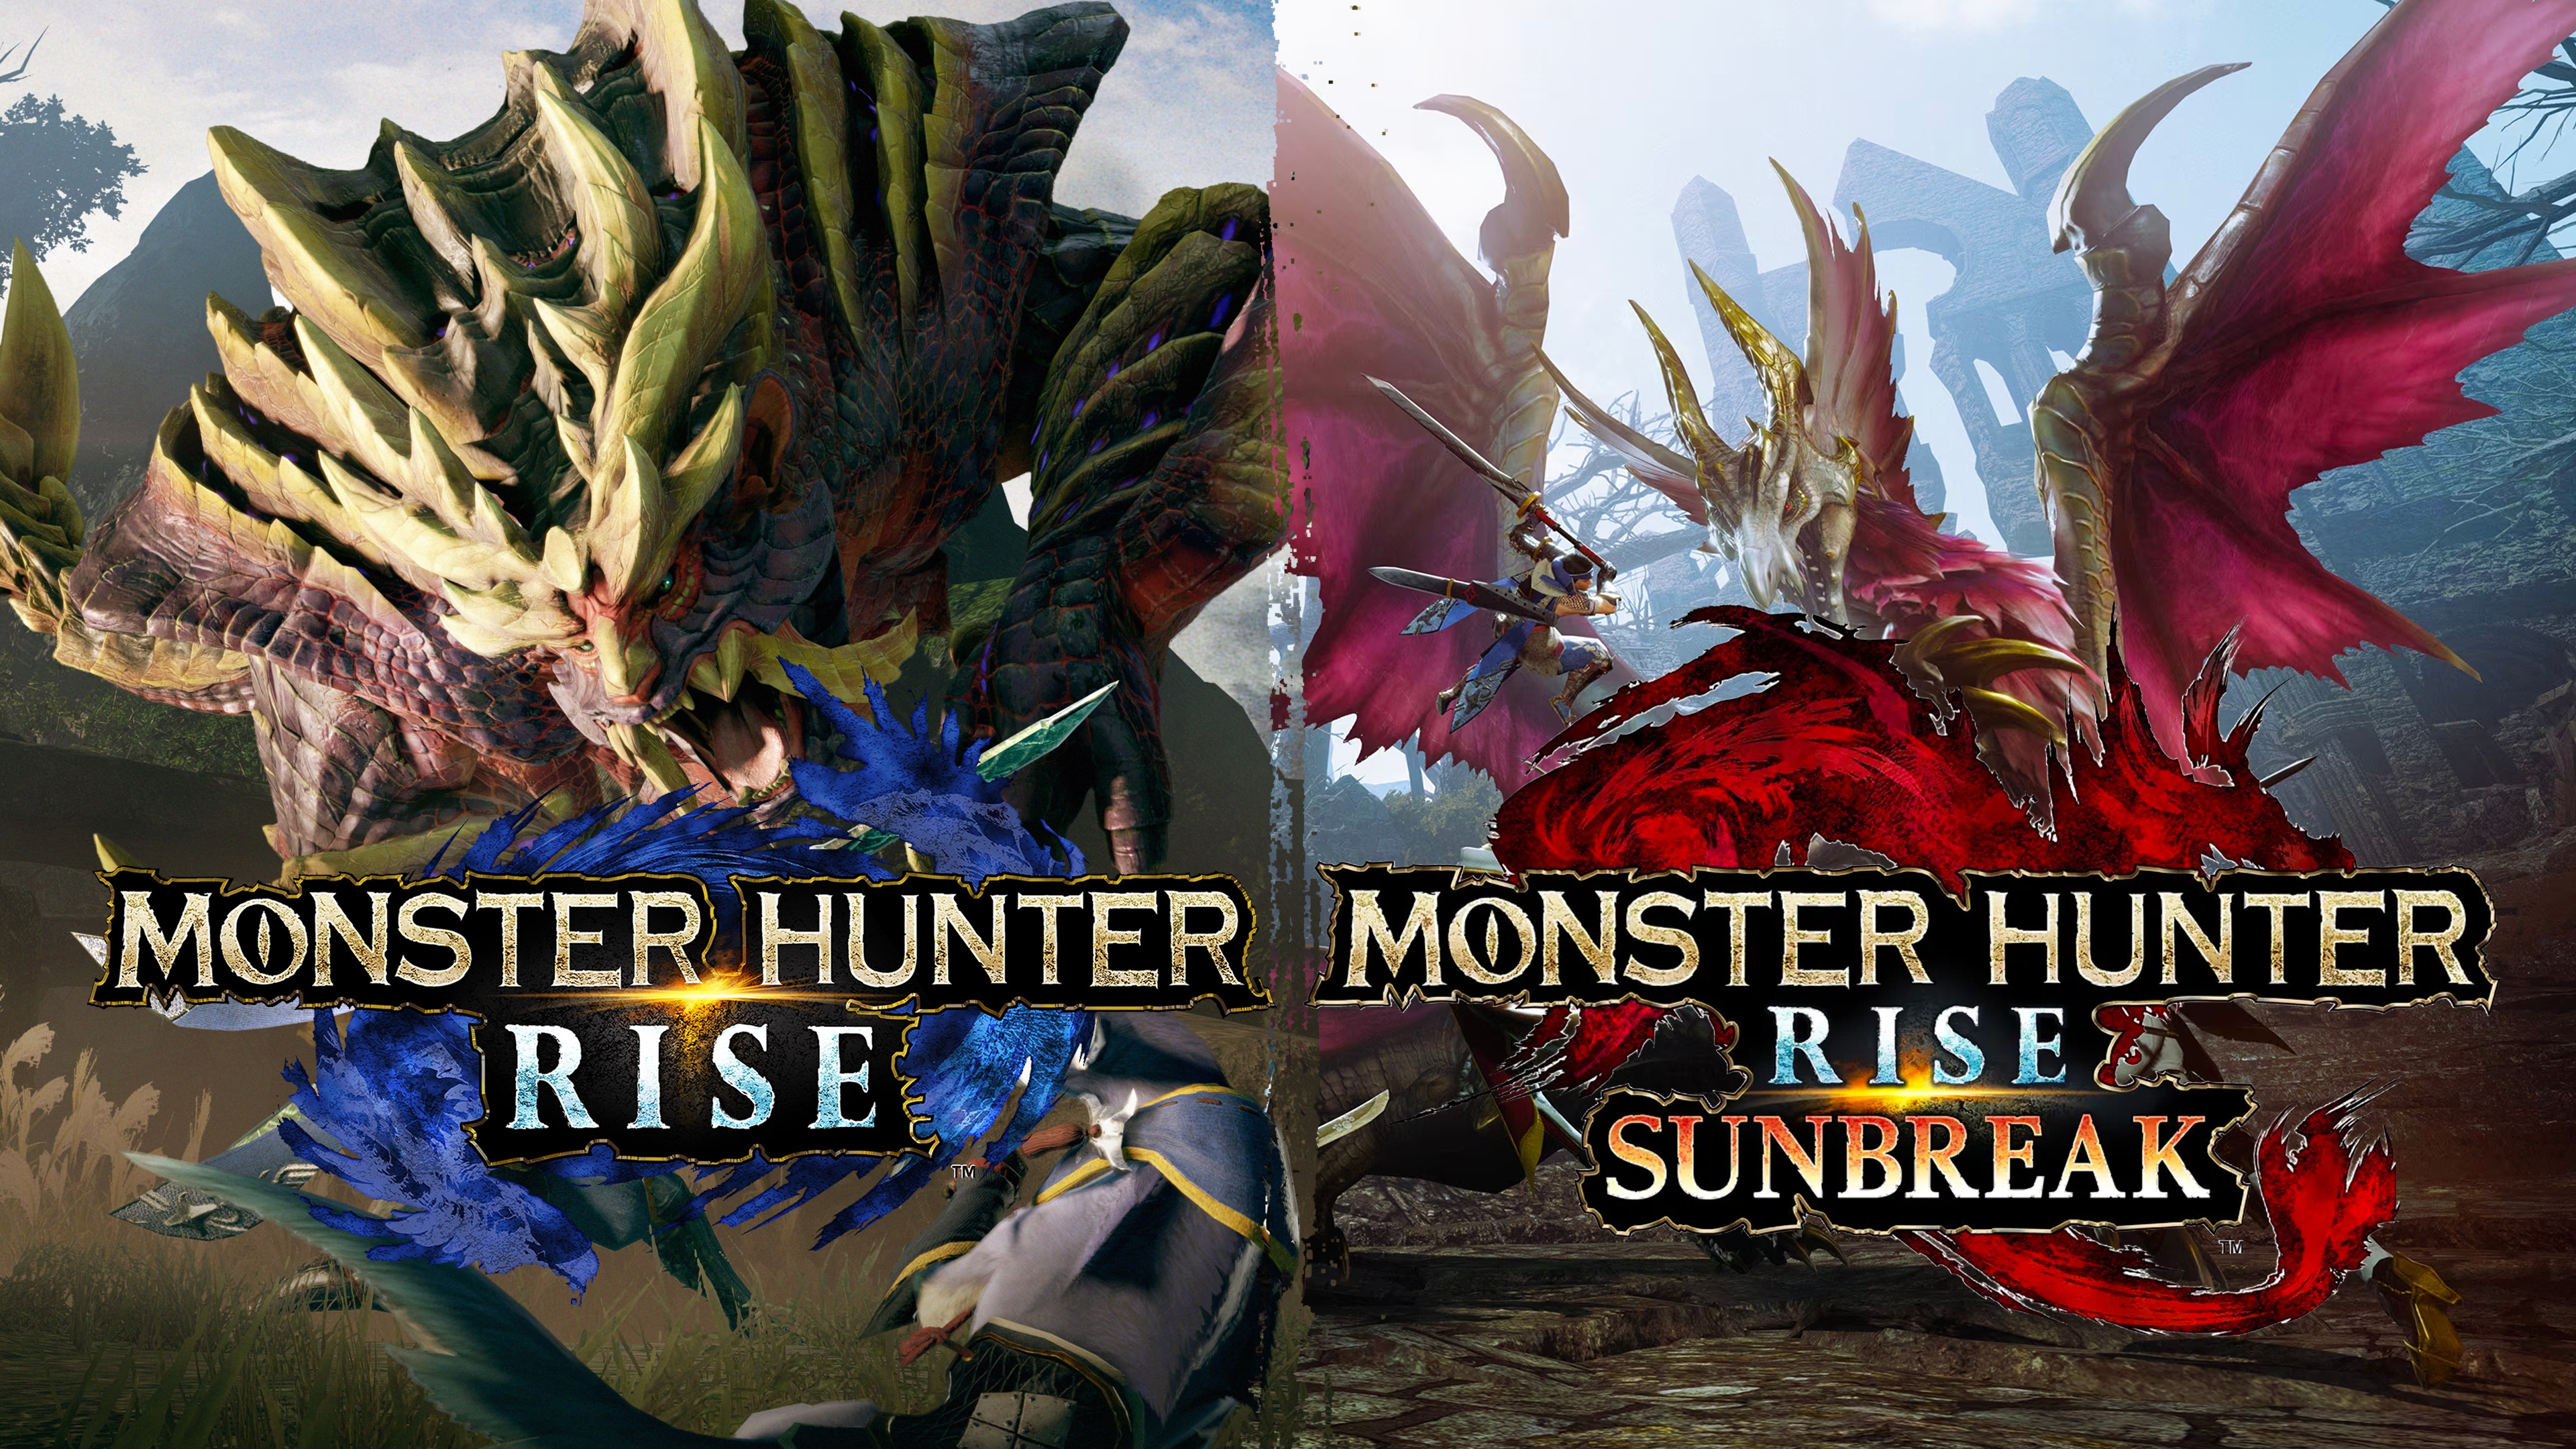 Caçando monstros grandes  Monster Hunter Rise: Sunbreak Manual Online  Oficial